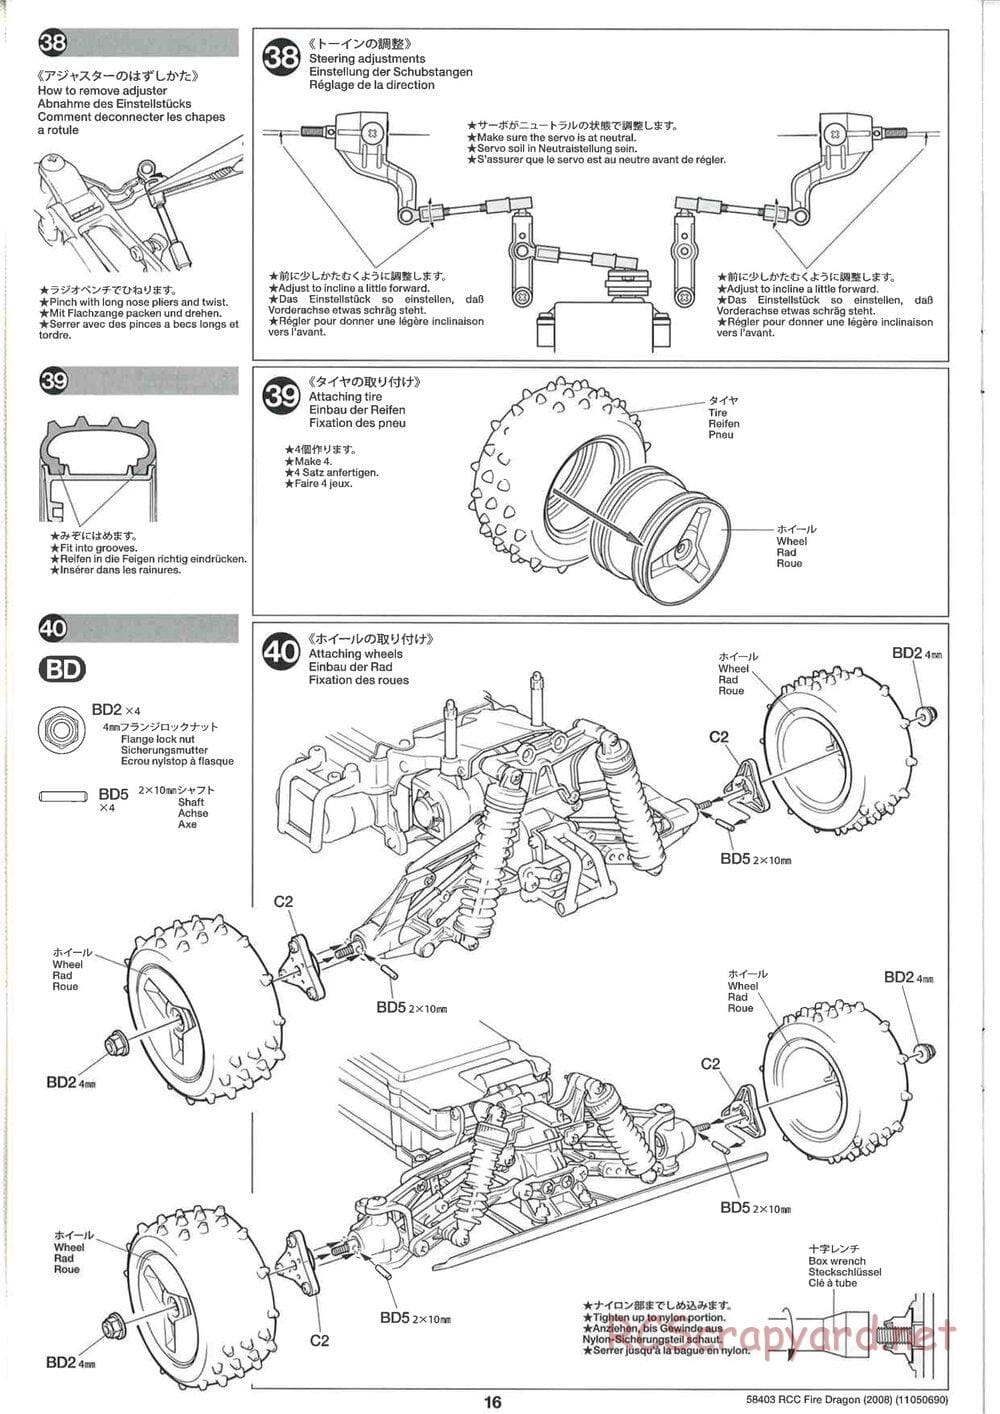 Tamiya - Fire Dragon 2008 - TS2 Chassis - Manual - Page 16